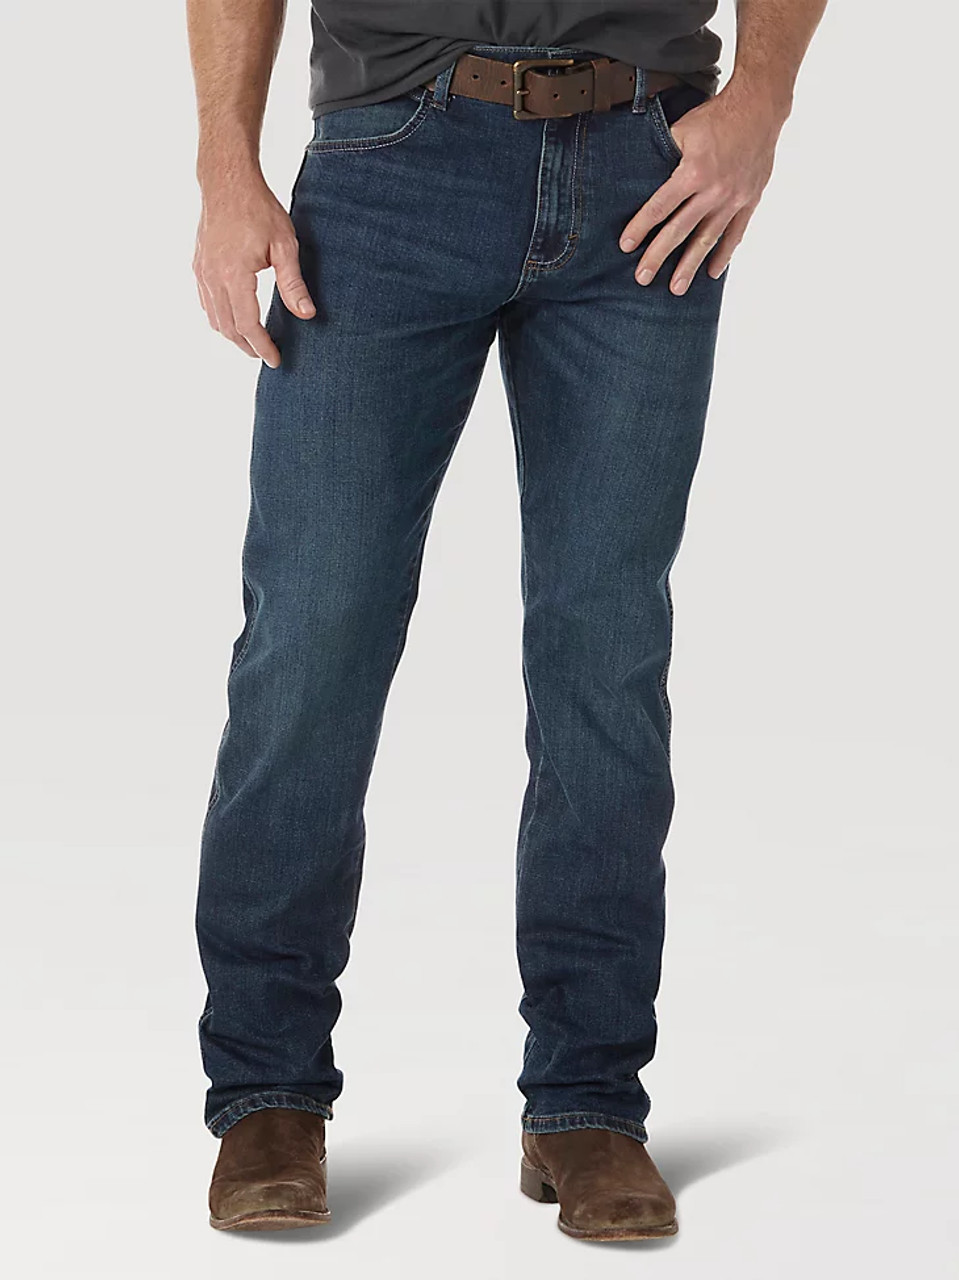 Wrangler Men's Jeans - Retro Slim Straight - Portland - Billy's Western ...